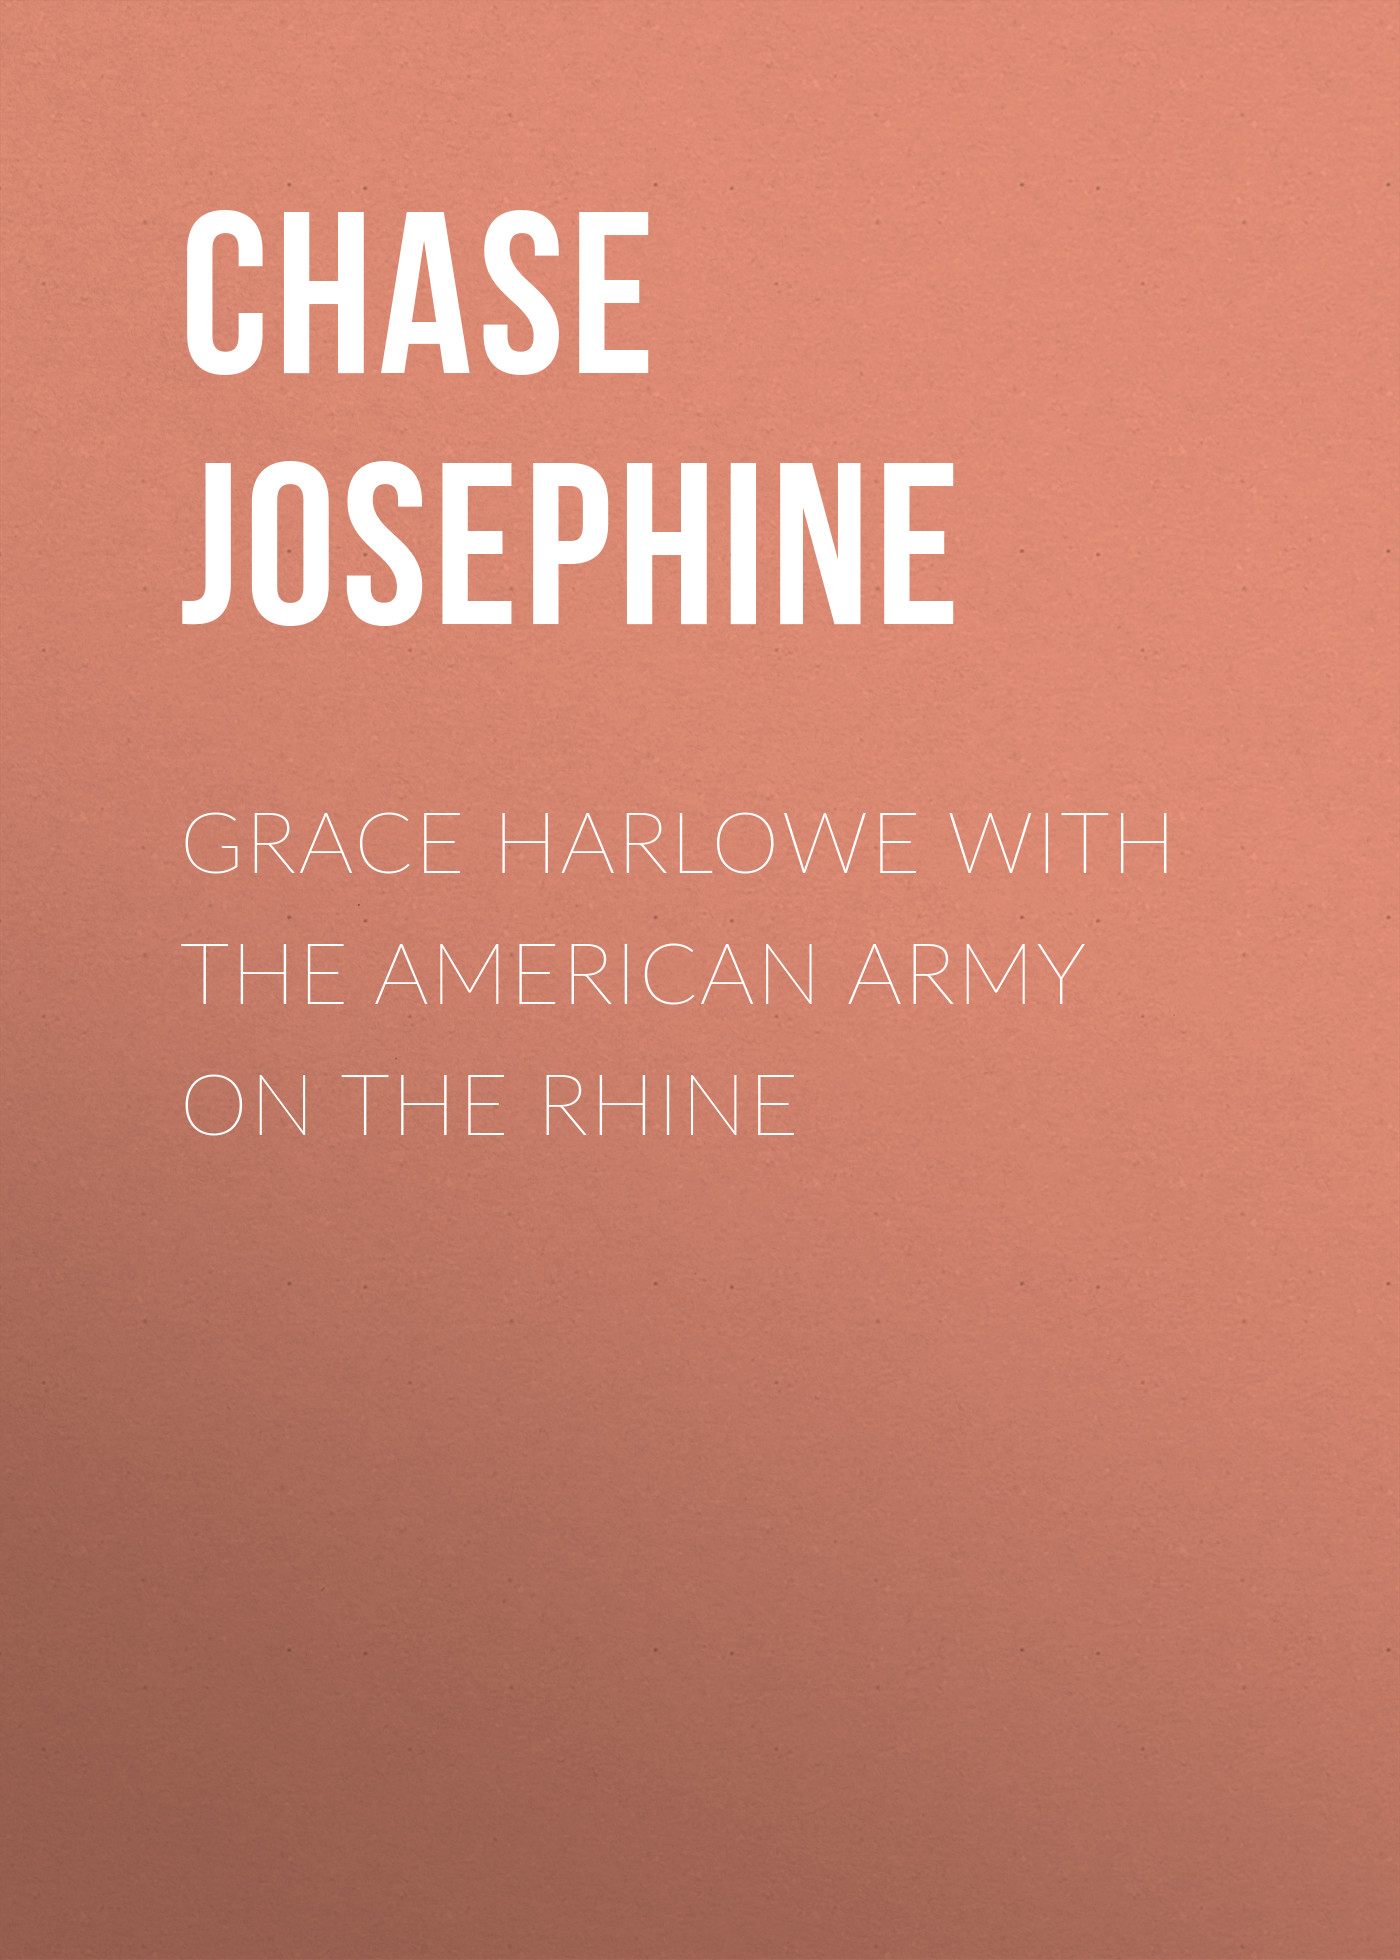 Книга Grace Harlowe with the American Army on the Rhine из серии , созданная Chase Josephine, может относится к жанру Зарубежная классика. Стоимость электронной книги Grace Harlowe with the American Army on the Rhine с идентификатором 23148963 составляет 5.99 руб.